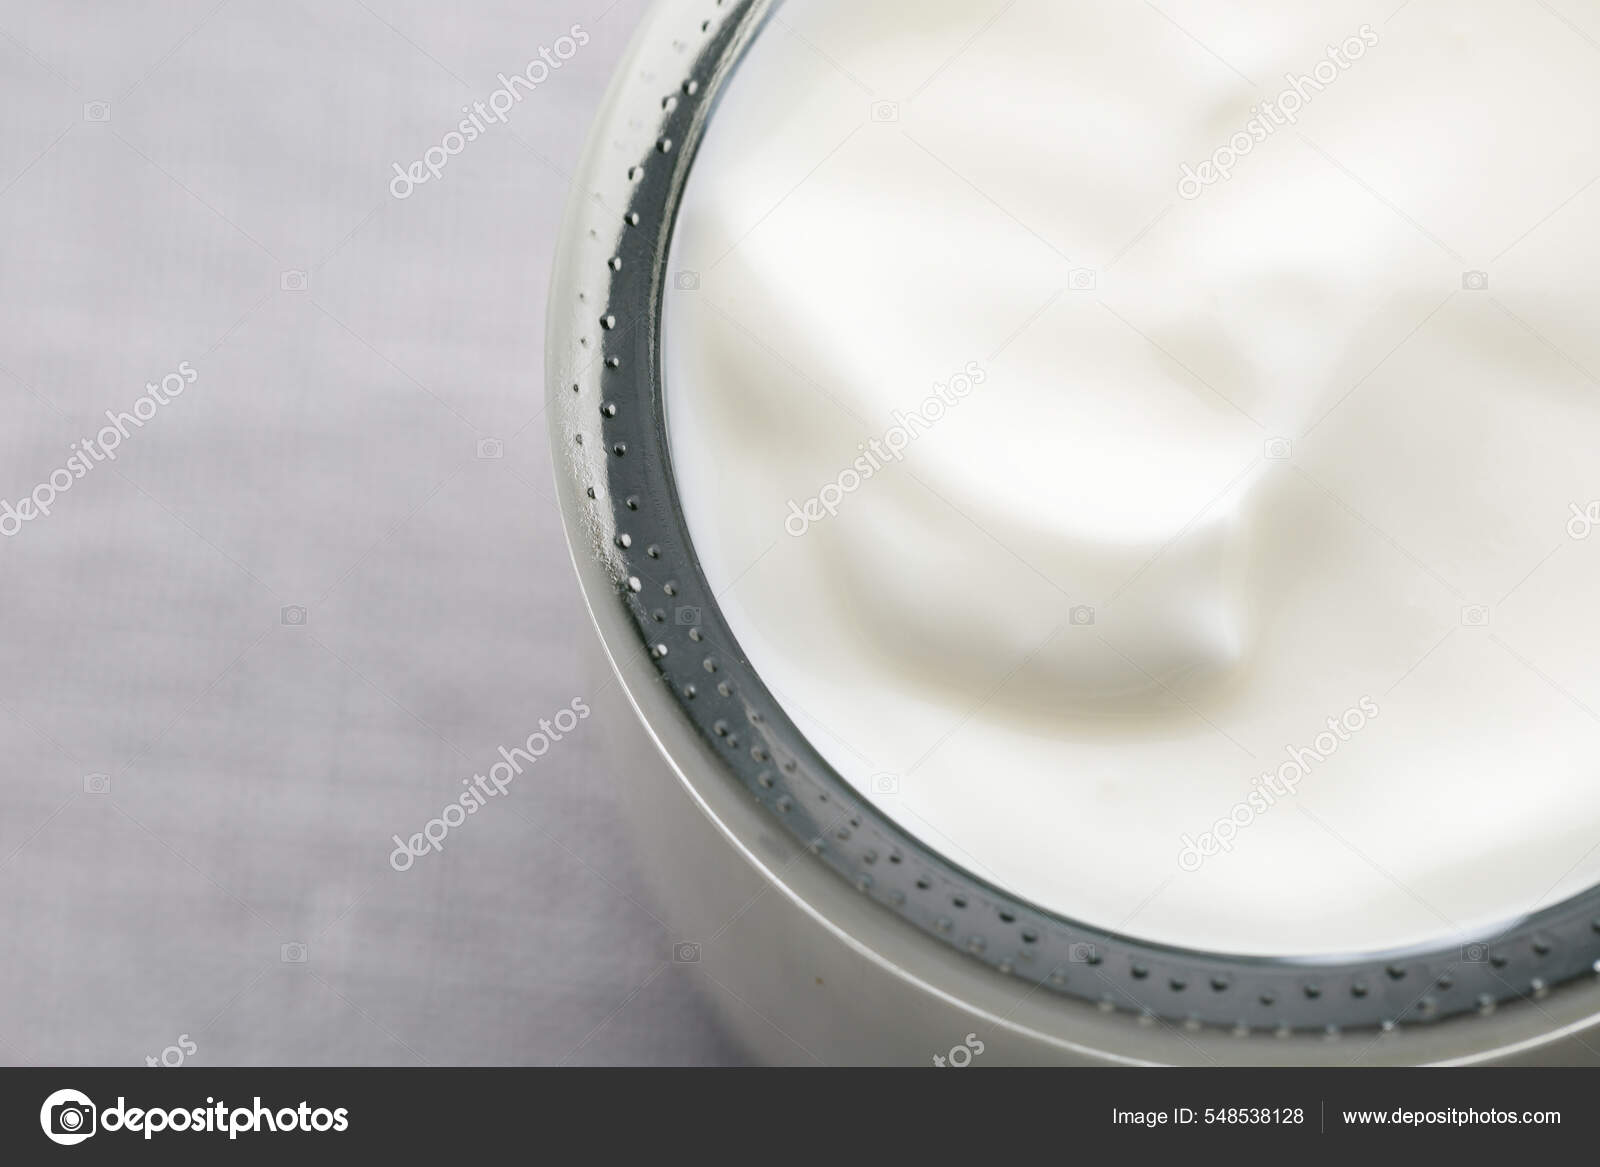 https://st.depositphotos.com/63881176/54853/i/1600/depositphotos_548538128-stock-photo-greek-yogurt-glass-jar-close.jpg